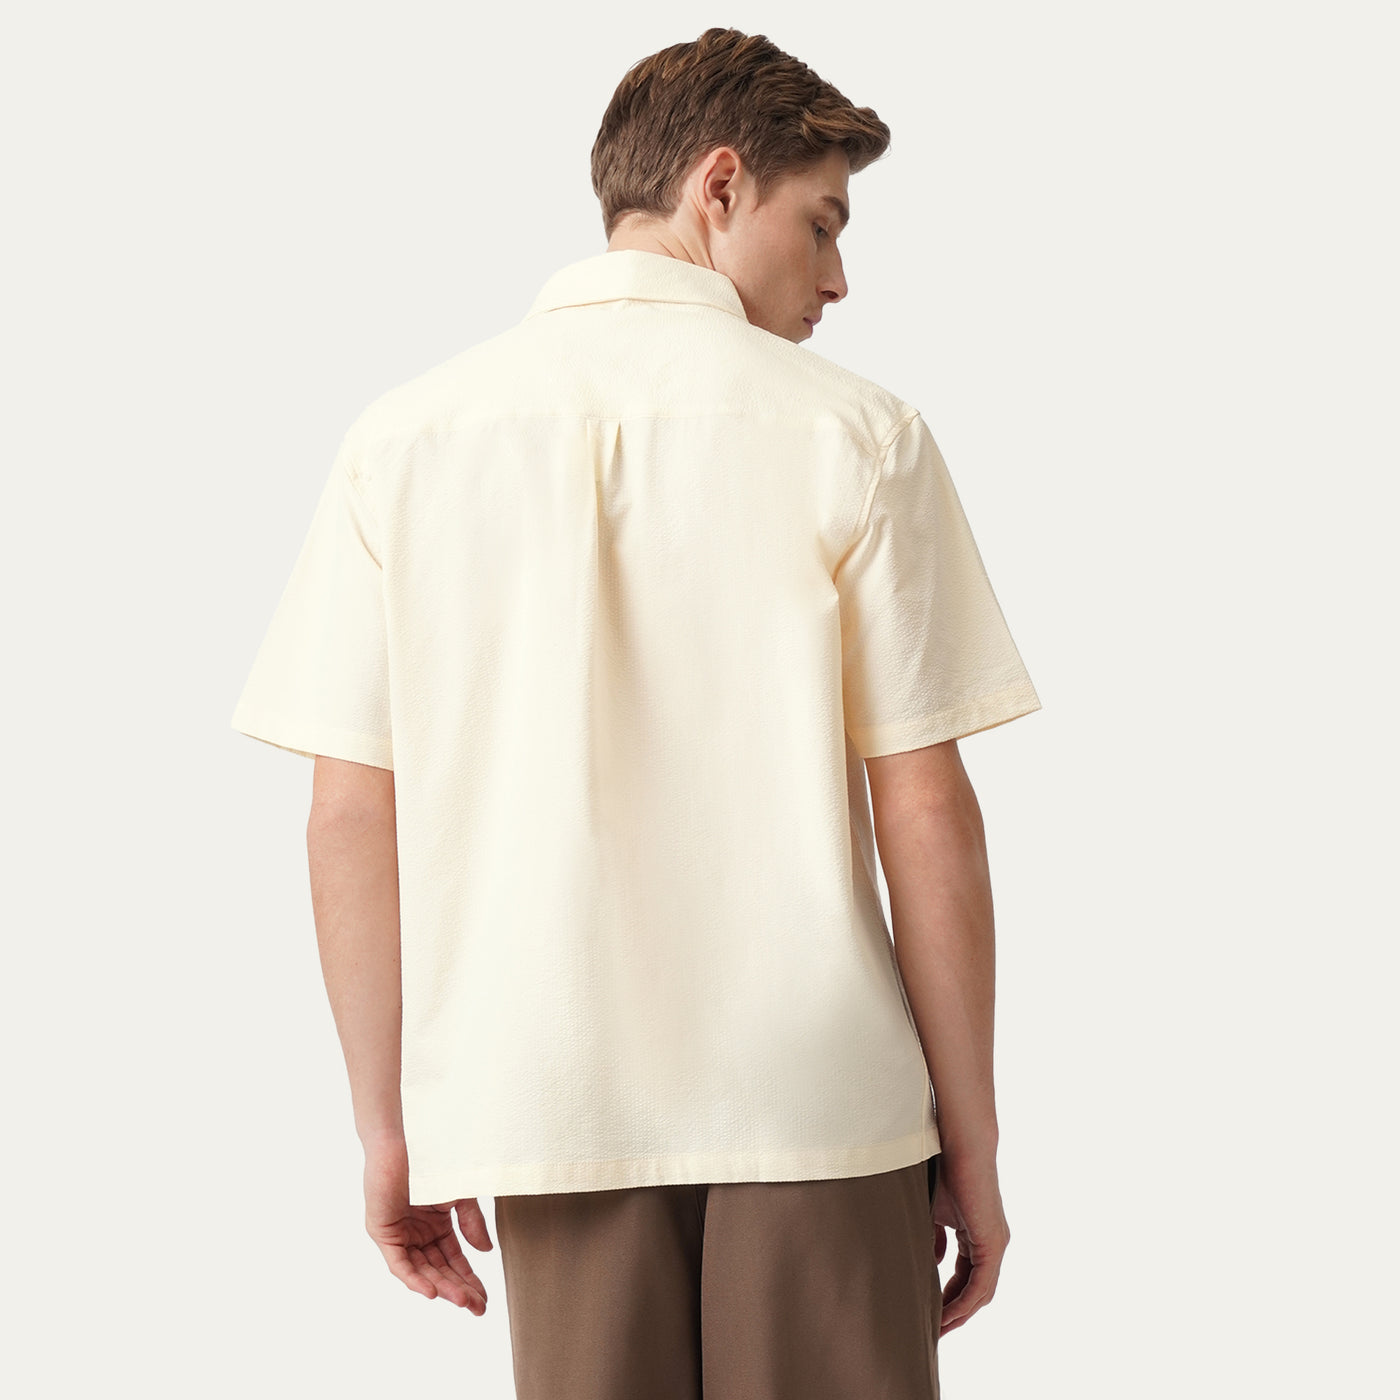 Relaxed Shirt in Seersucker Fabric